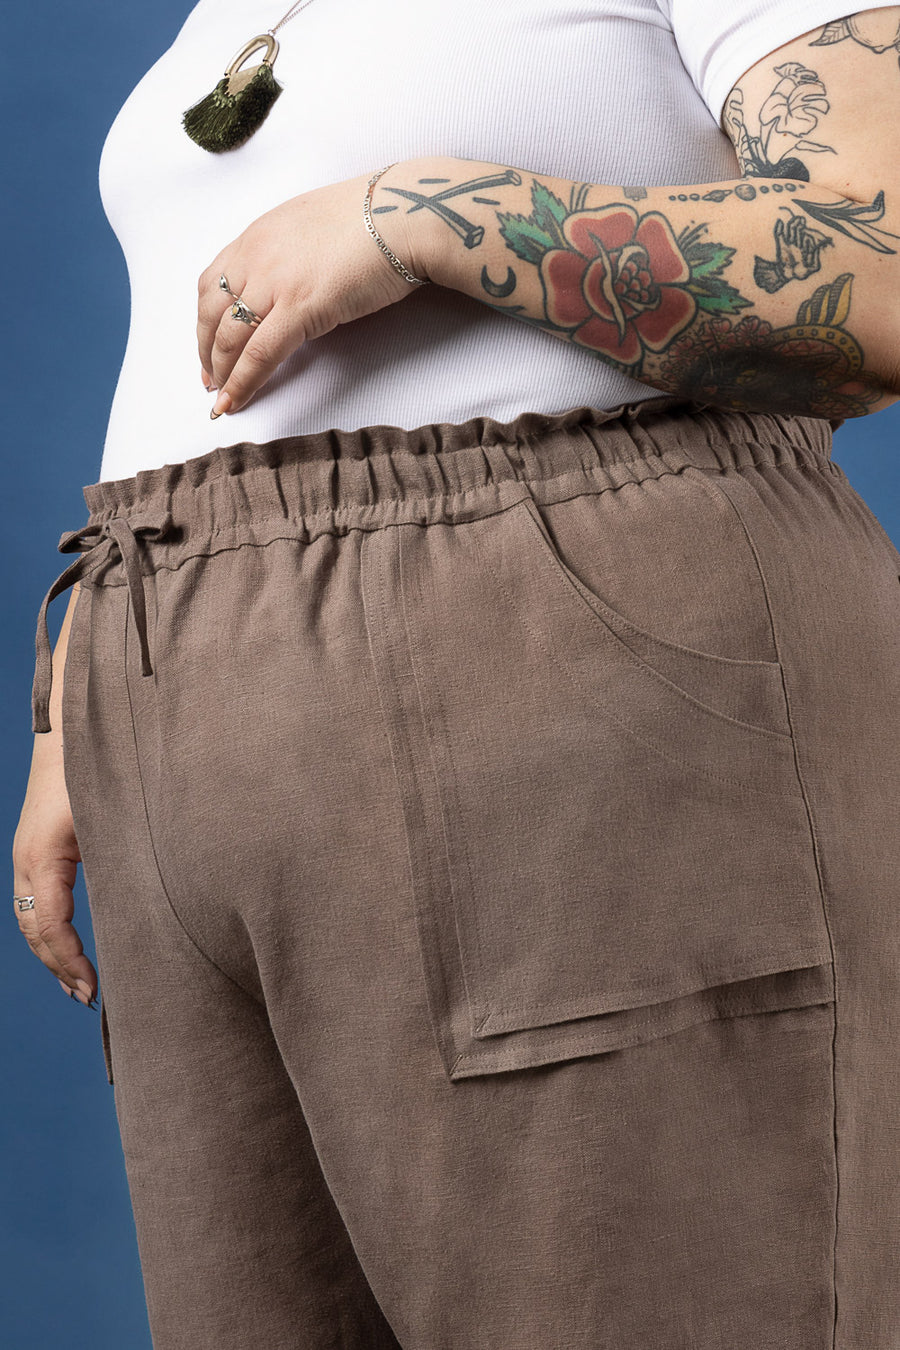 Women's Trouser Pants High Waisted Sewing Pattern UNCUT 14 16 18 Cuffed